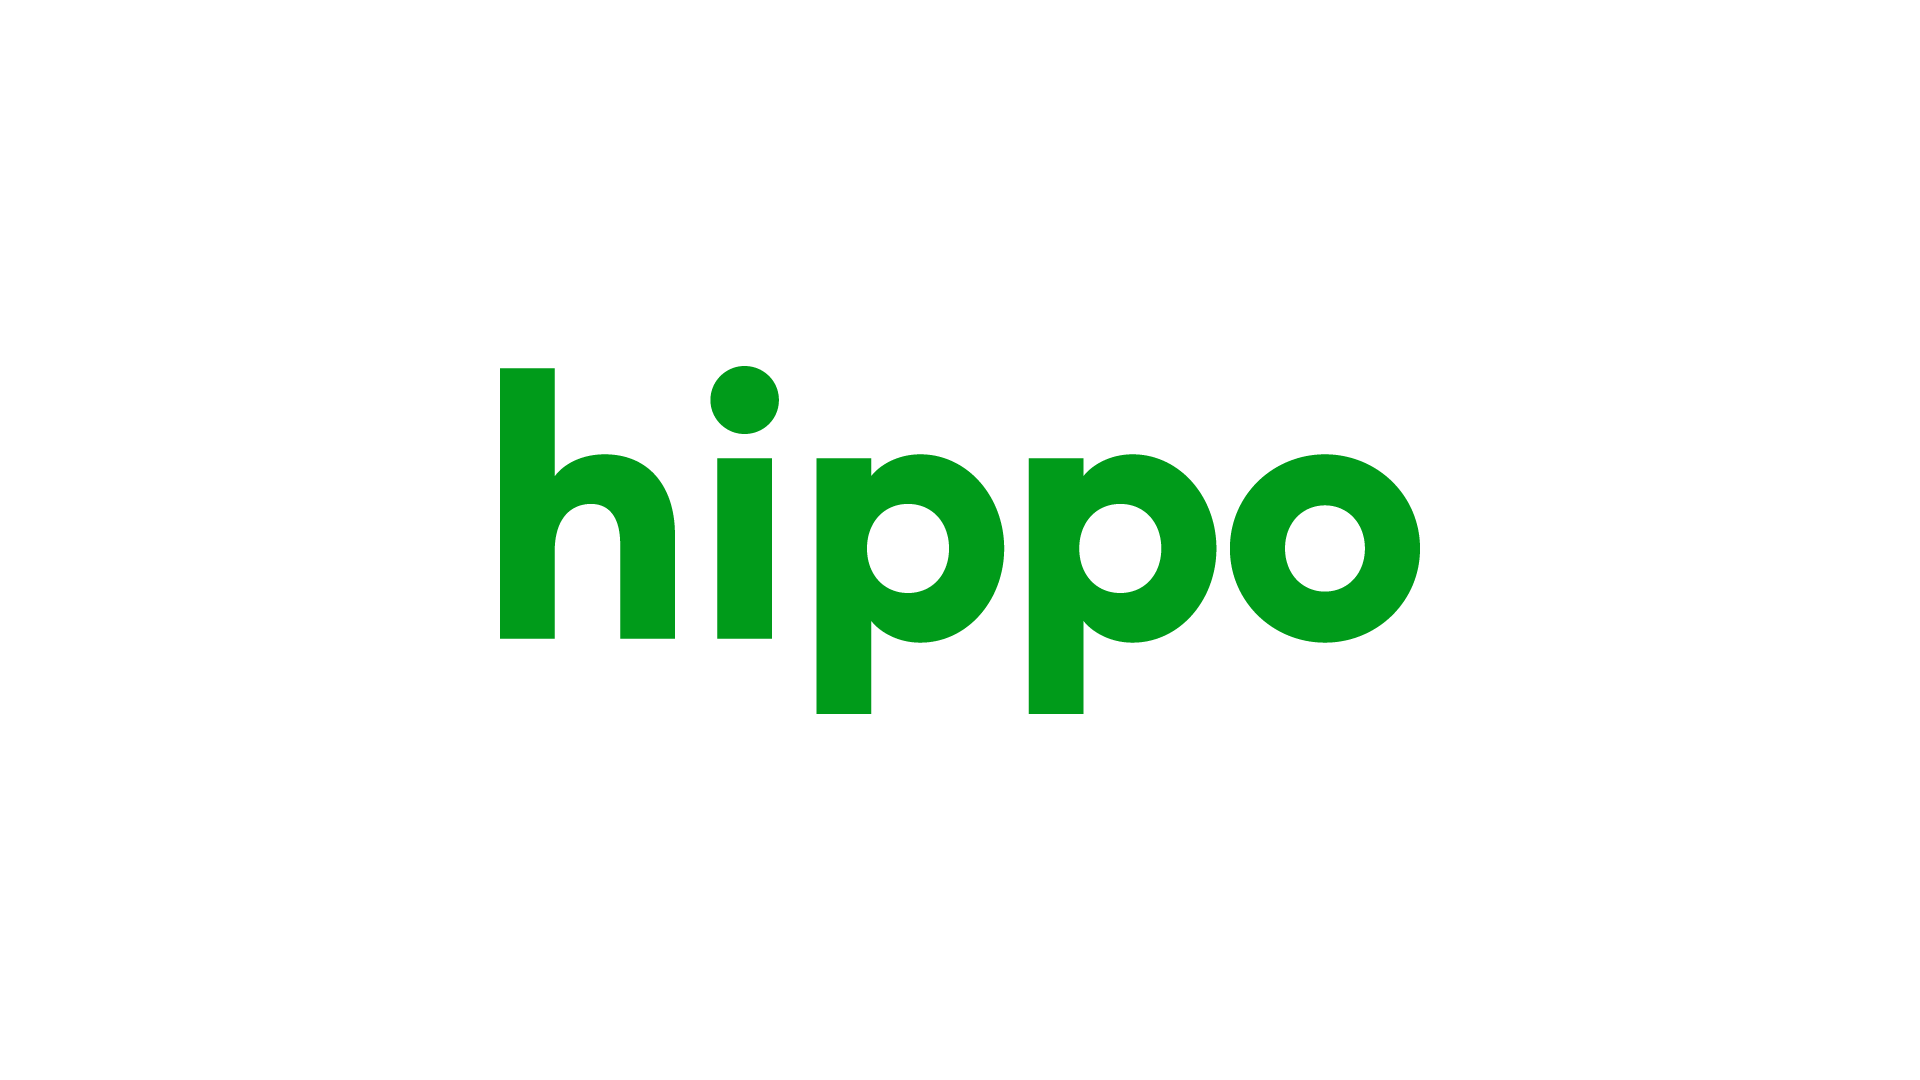 Hippo Holdings Inc